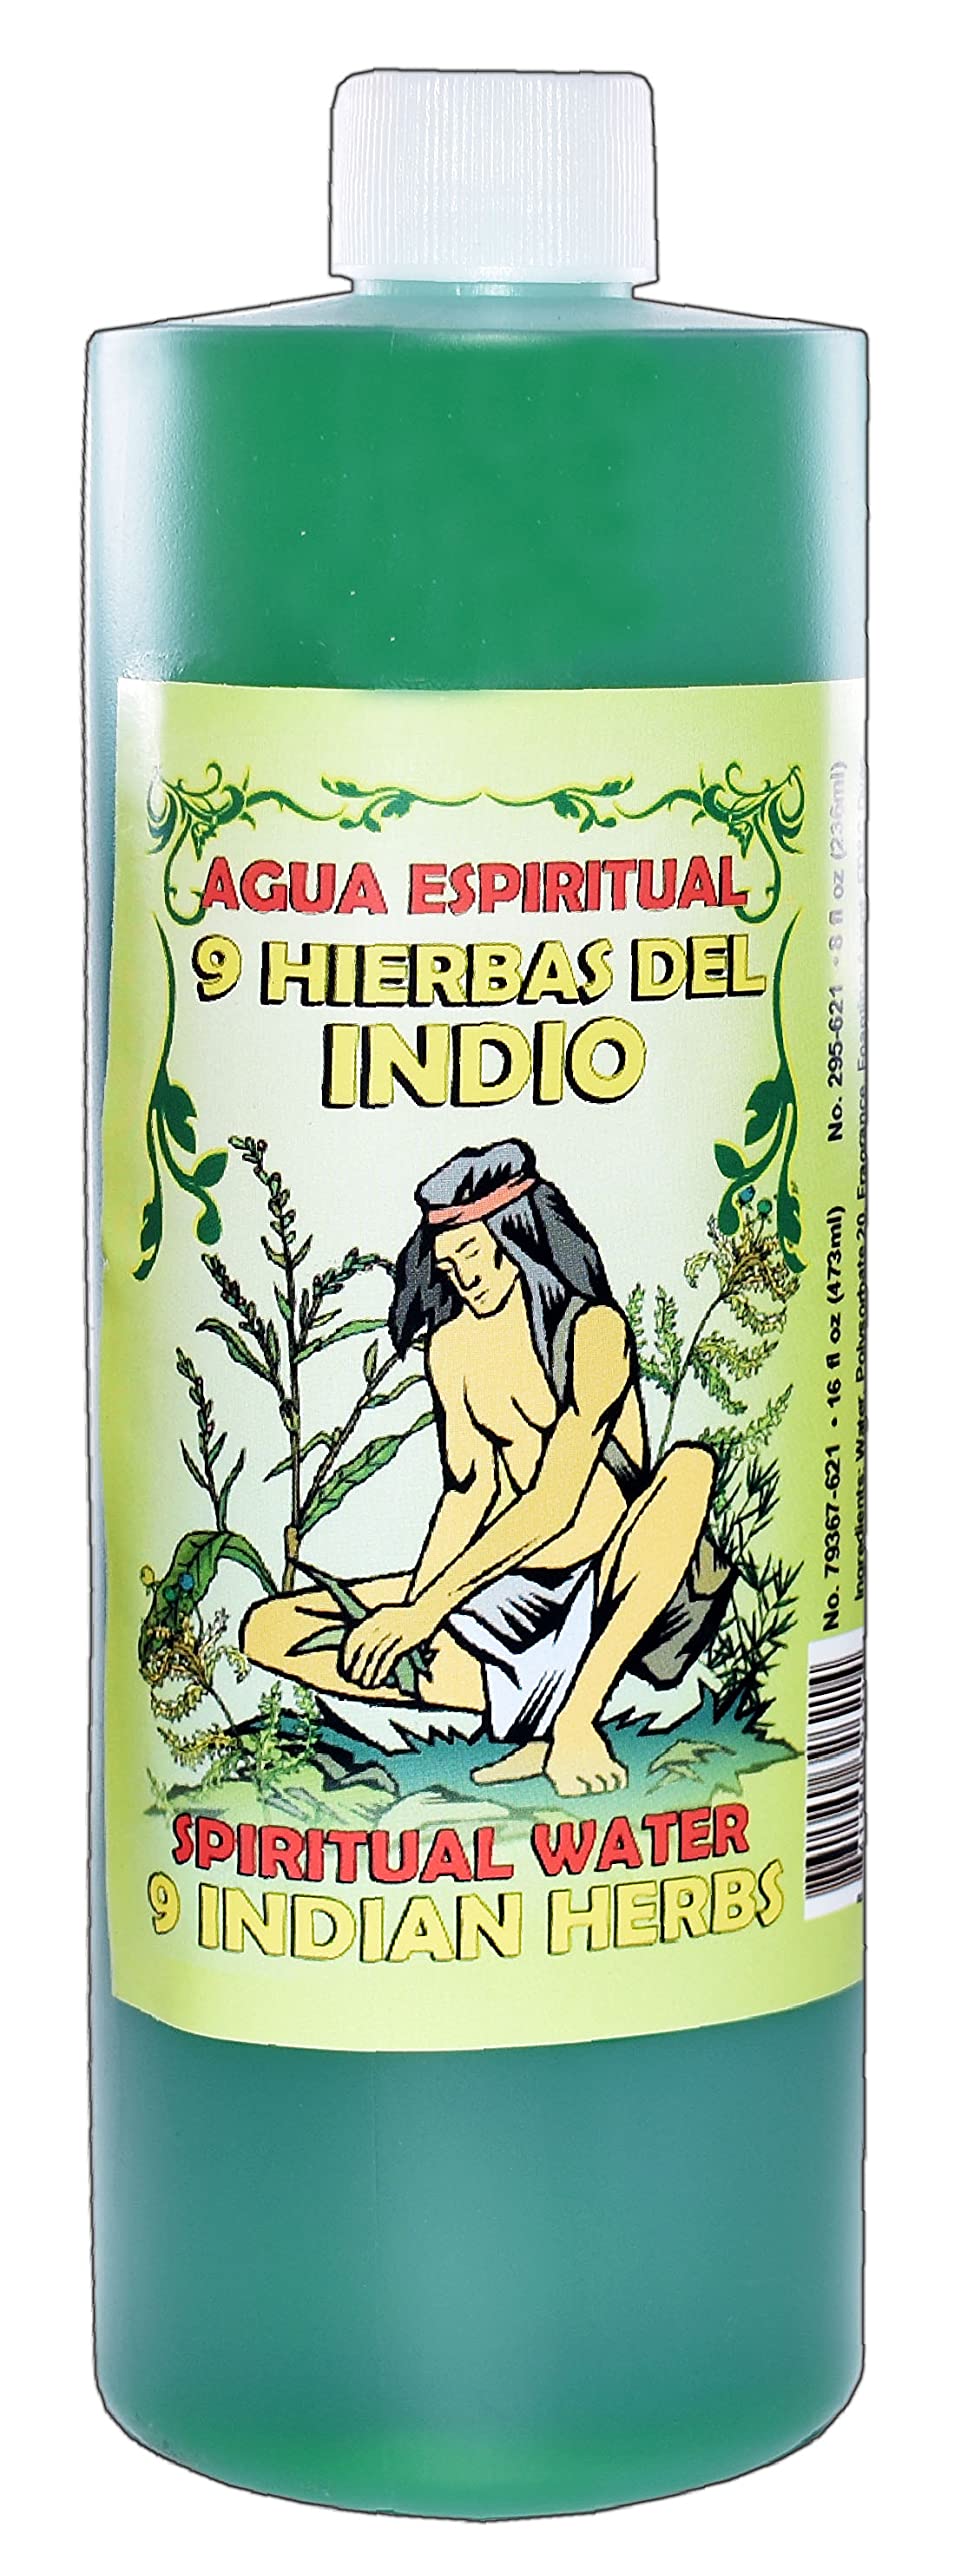 1 Bottle 9 Indian Herbs Spiritual Water-9 HIERBAS DEL Indio AGUA ESPIRITUAL 16 OZ. - Magick Pagan